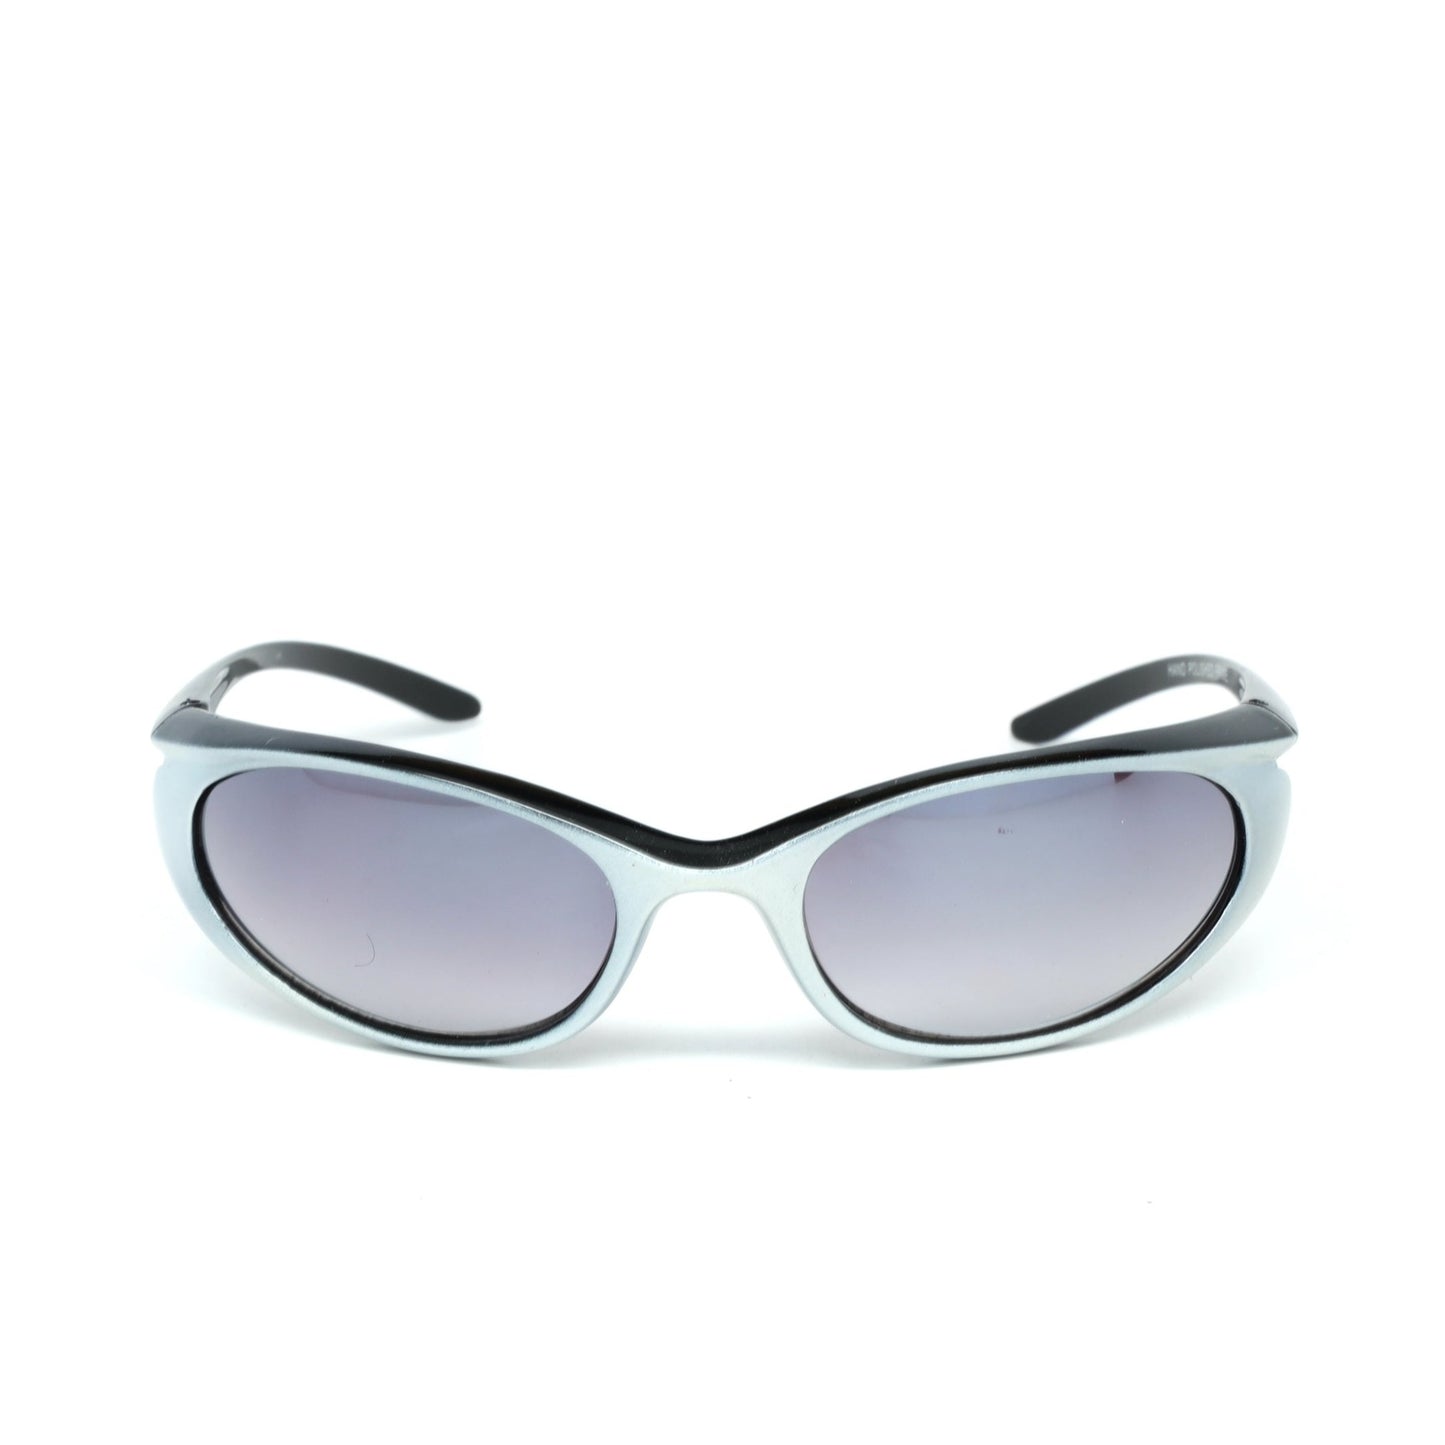 Prototype 2 Classic Hue Dual Colored Visor Sunglasses - Grey/Black